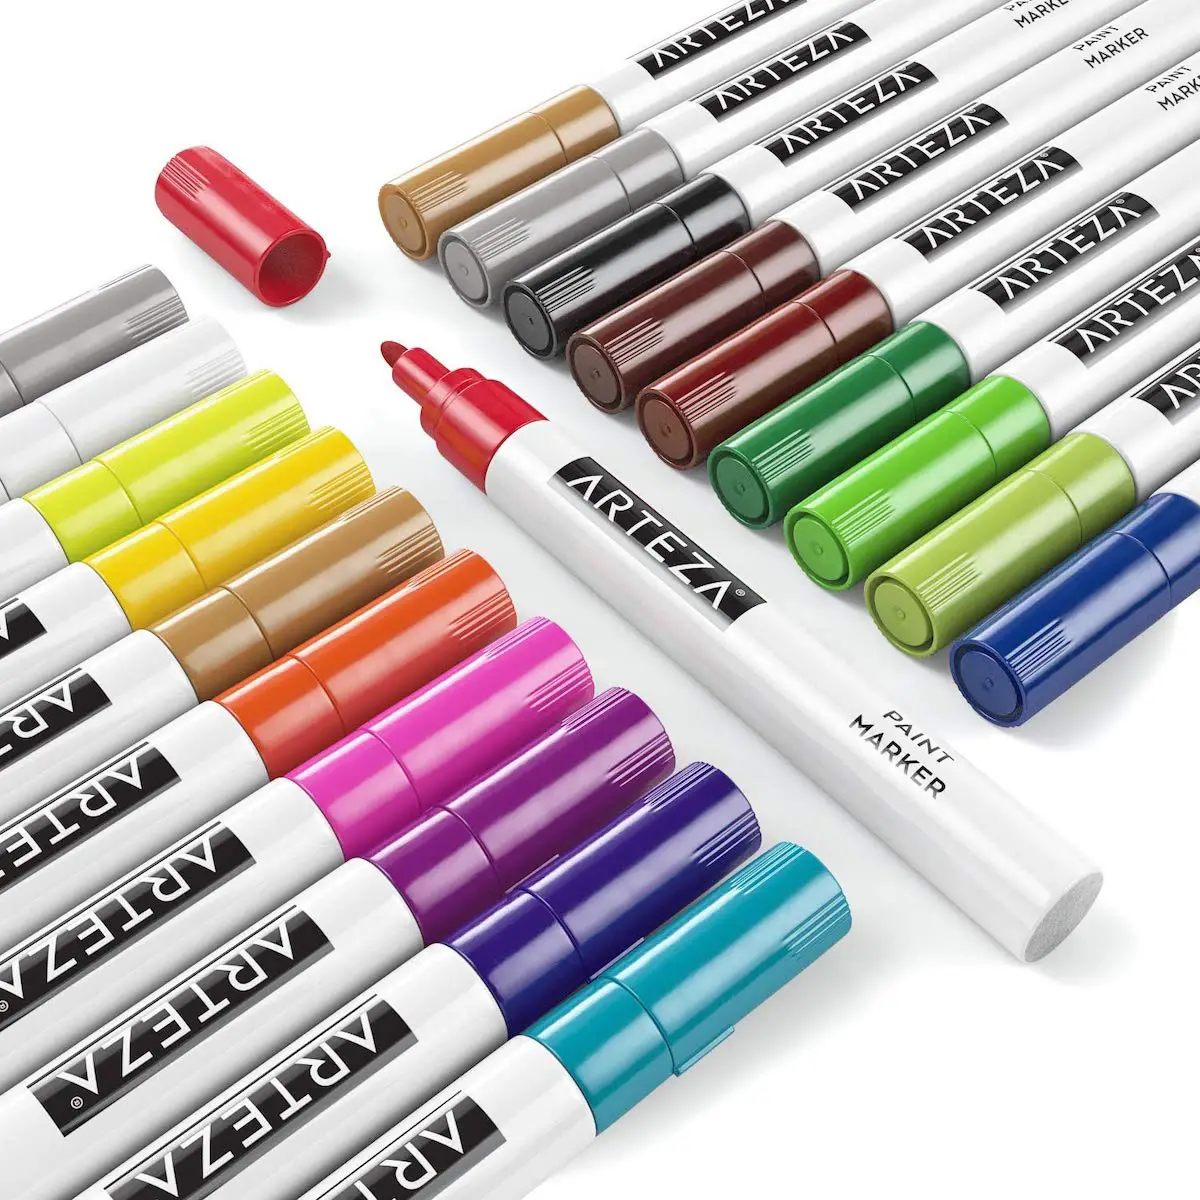 Marker Pens for Artists Review  Marker art, Paint marker pen, Markers